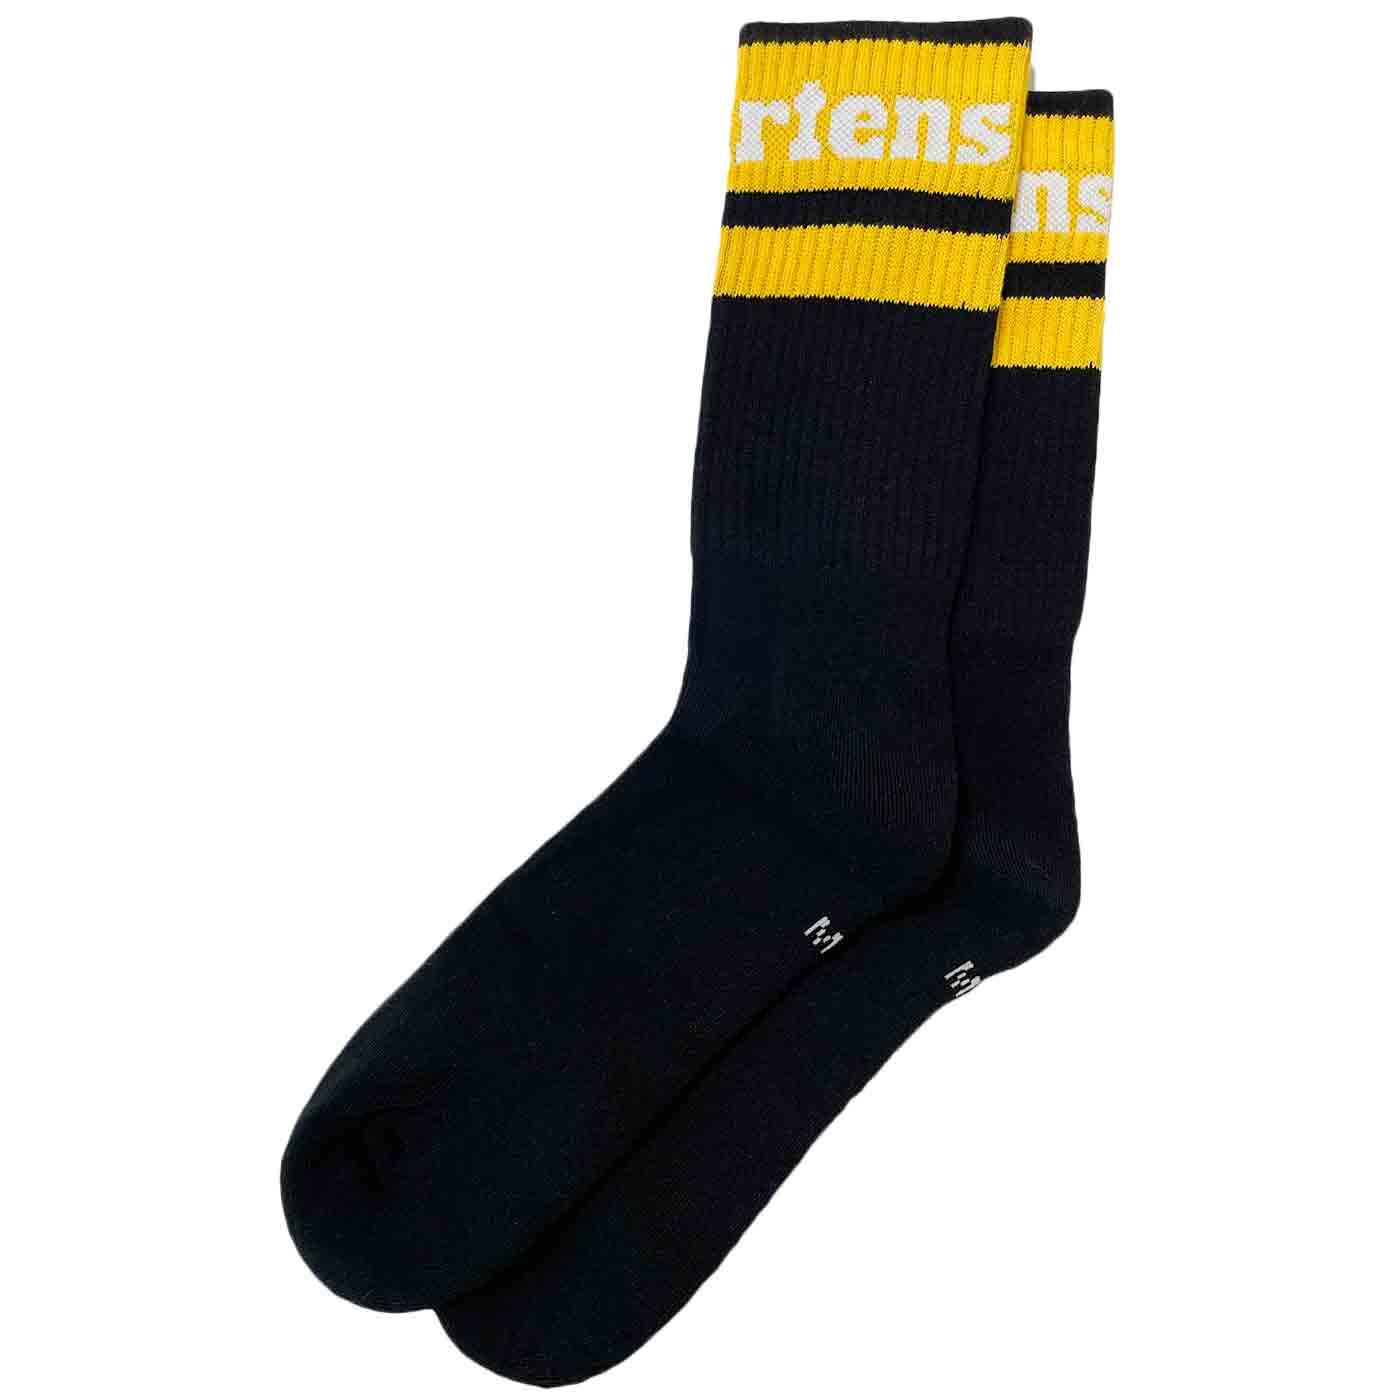 +Dr Martens Retro Athletic Logo Sock Black/Yellow